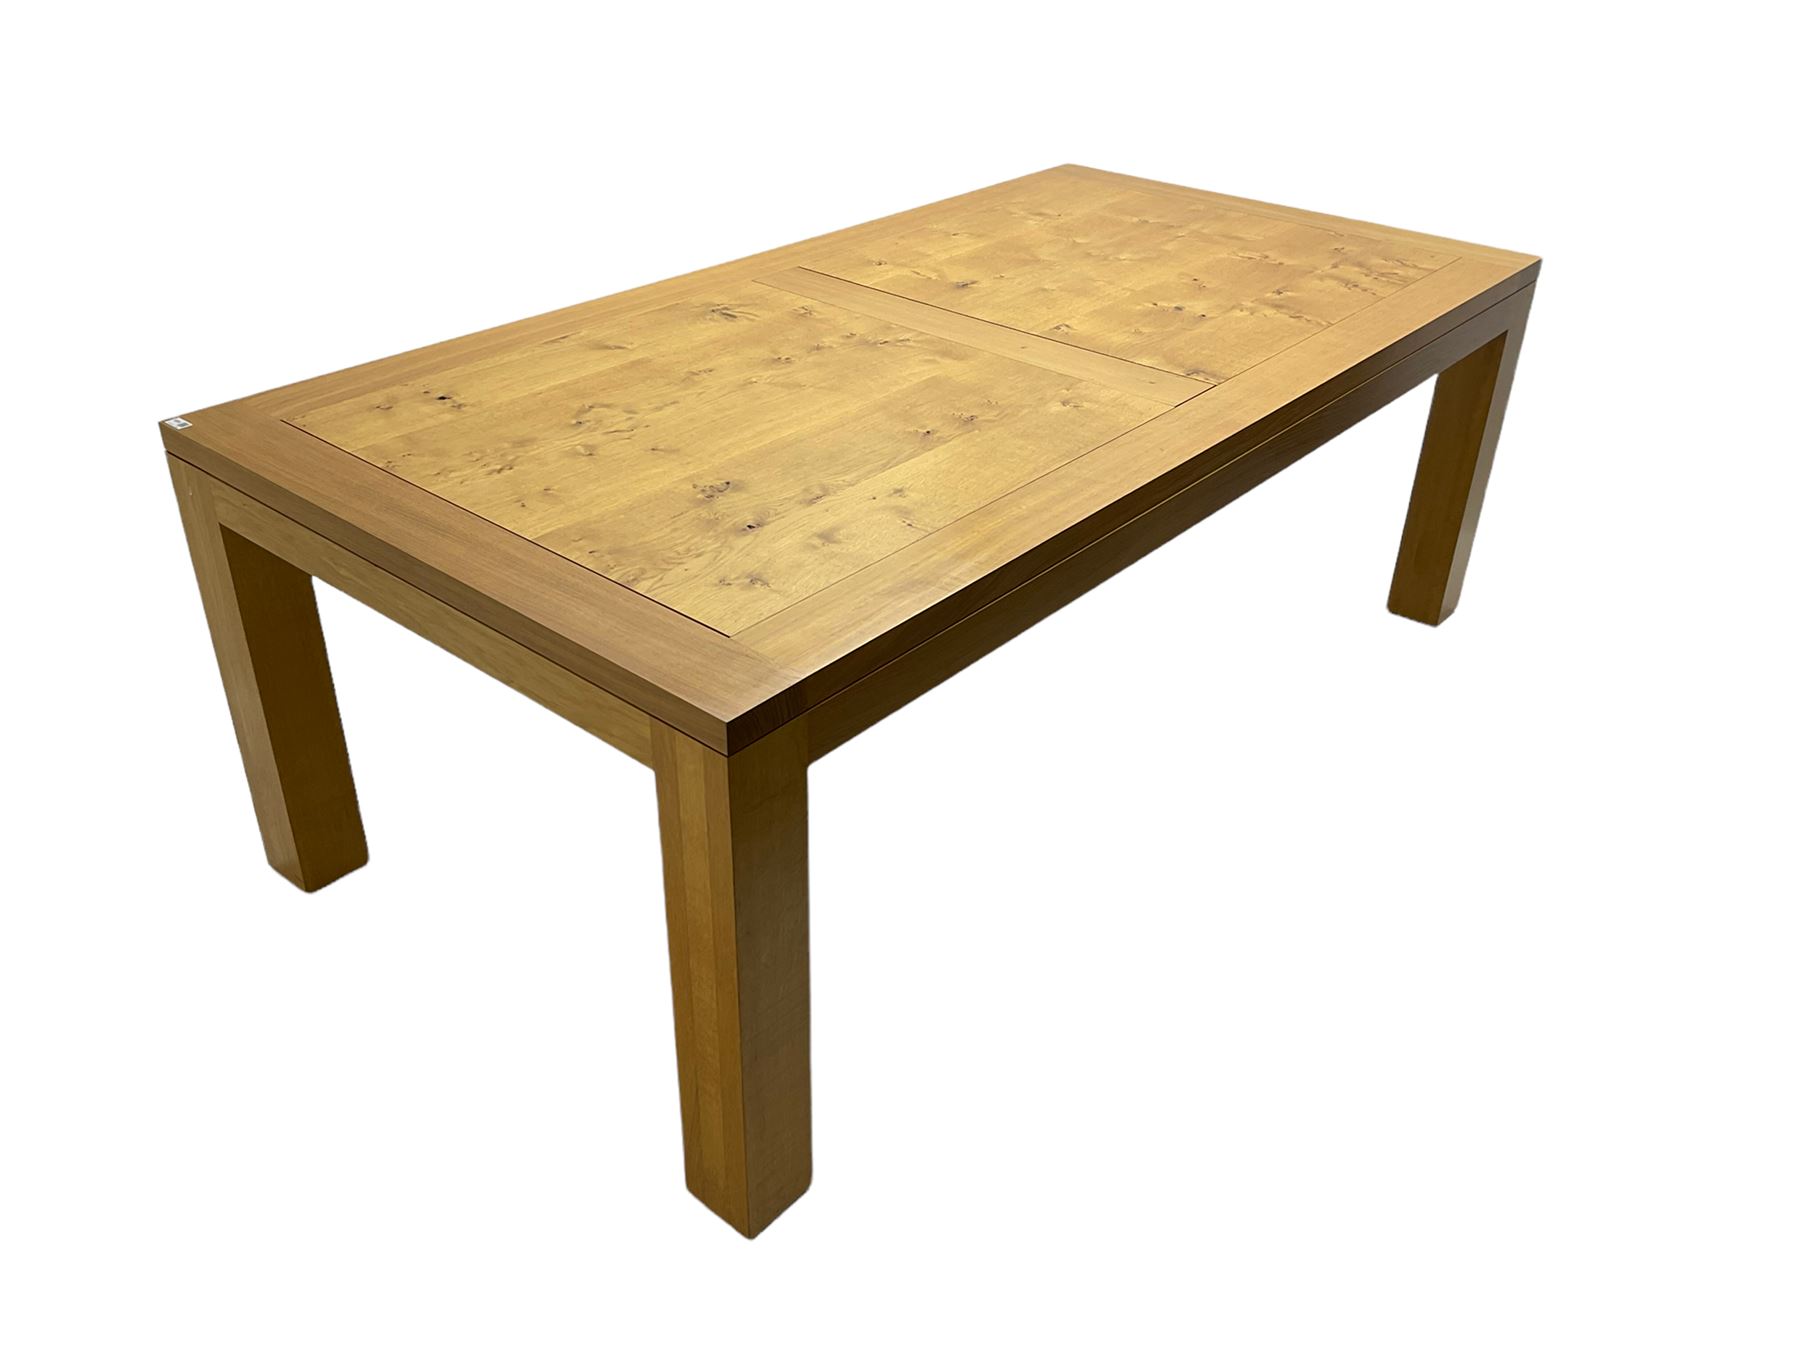 Large pippy oak rectangular dining table - Image 11 of 13